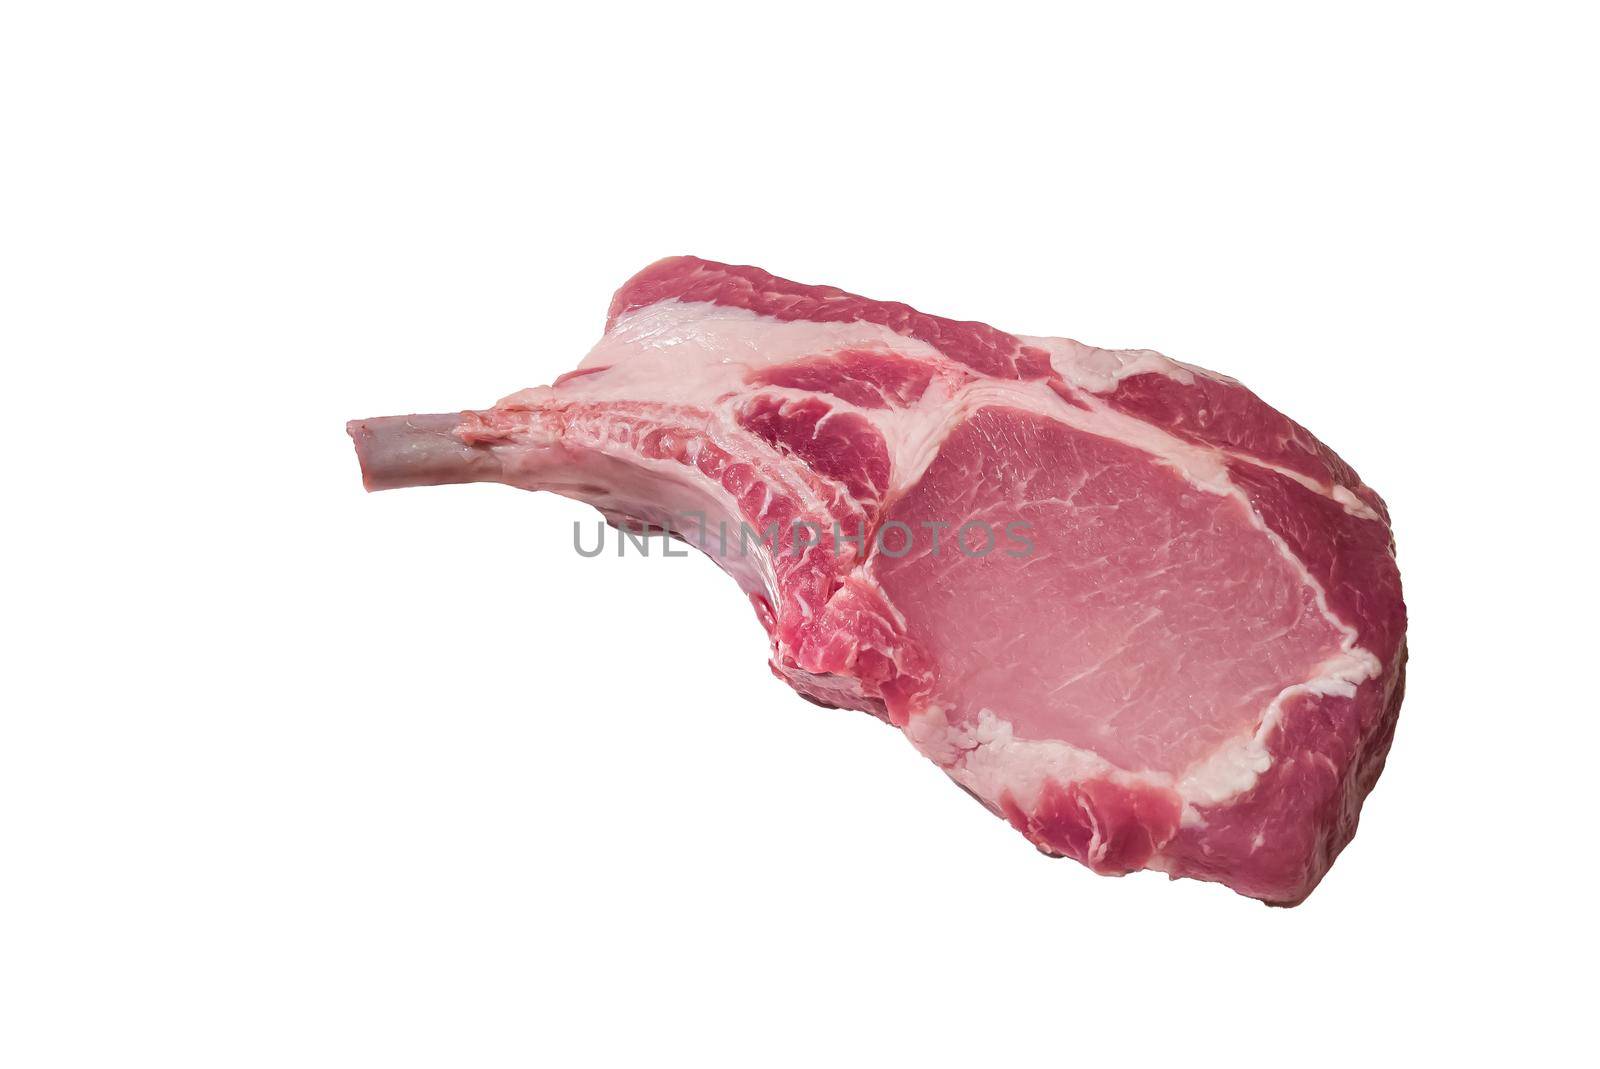 Raw pork loin on the bone with bacon by Milanchikov